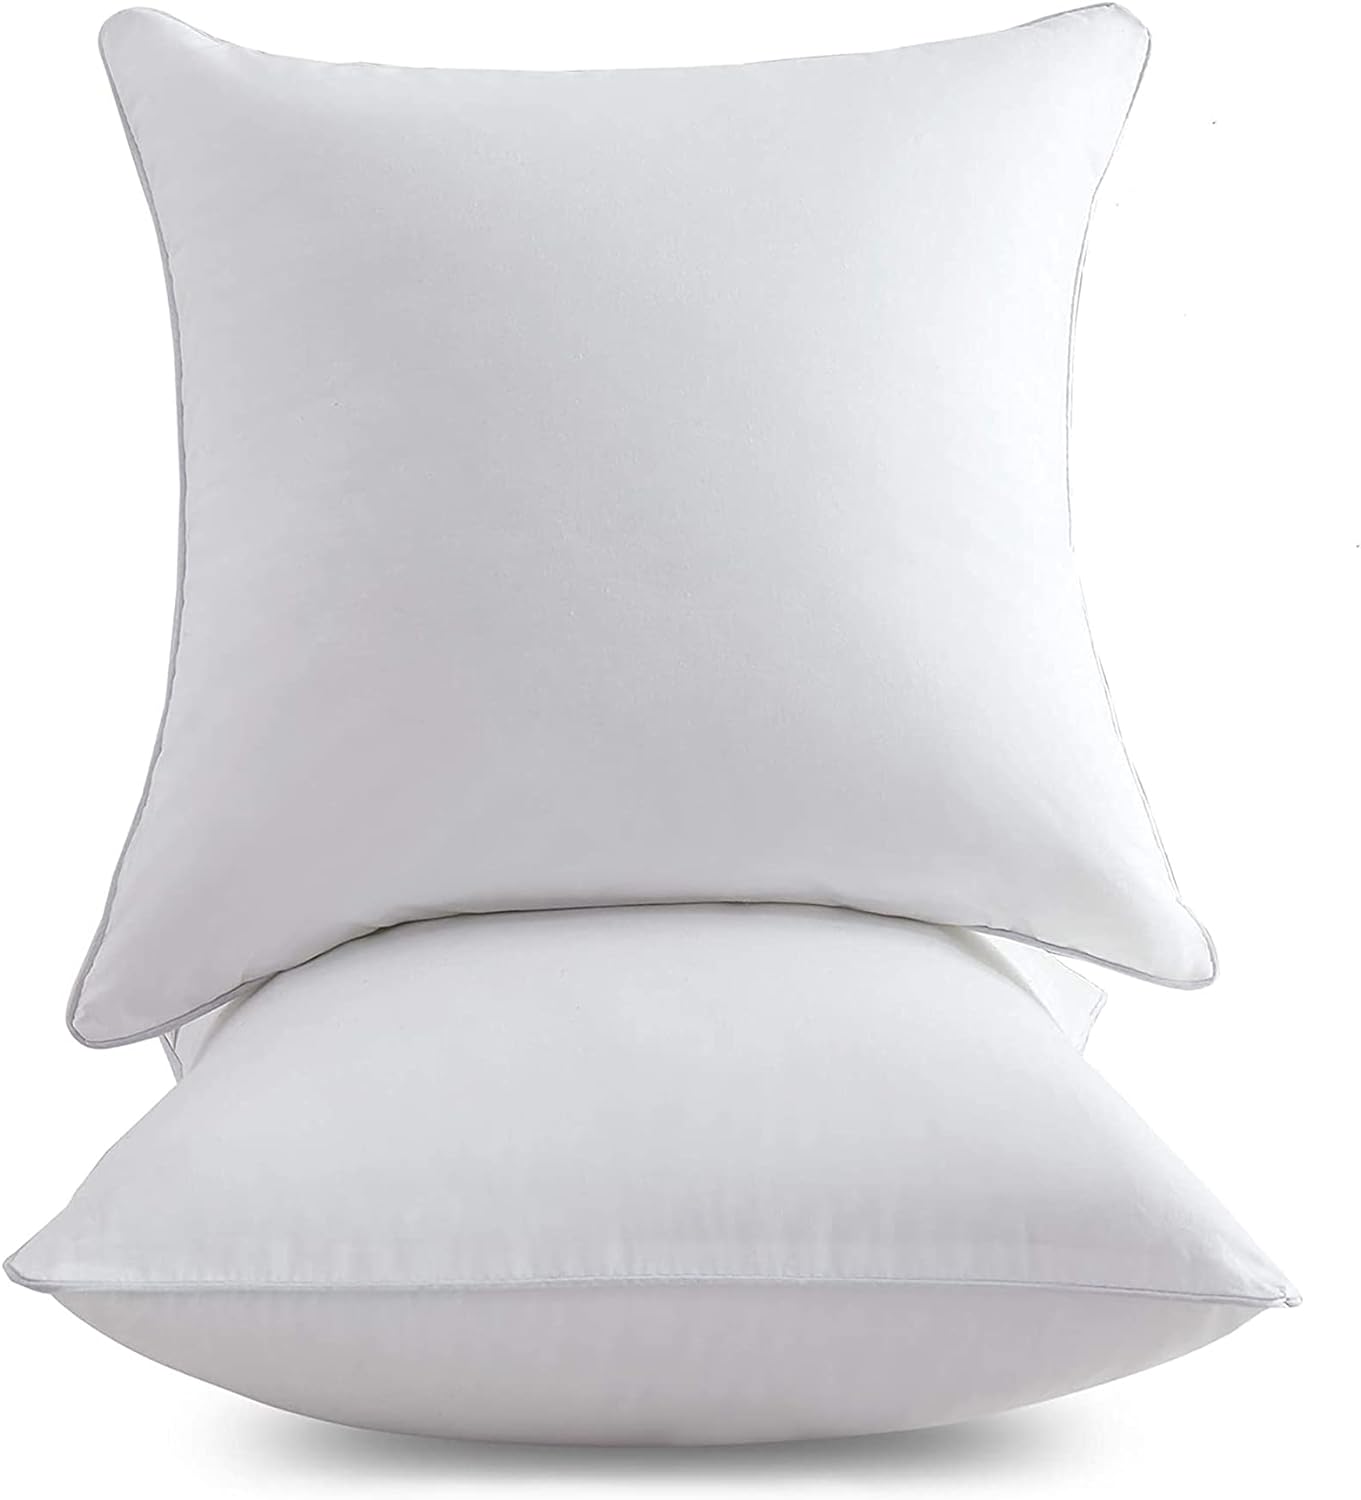 Pillow Insert 18x18 Euro Sham Throw Pillow Couch Cushion Stuffing White 18 inch 